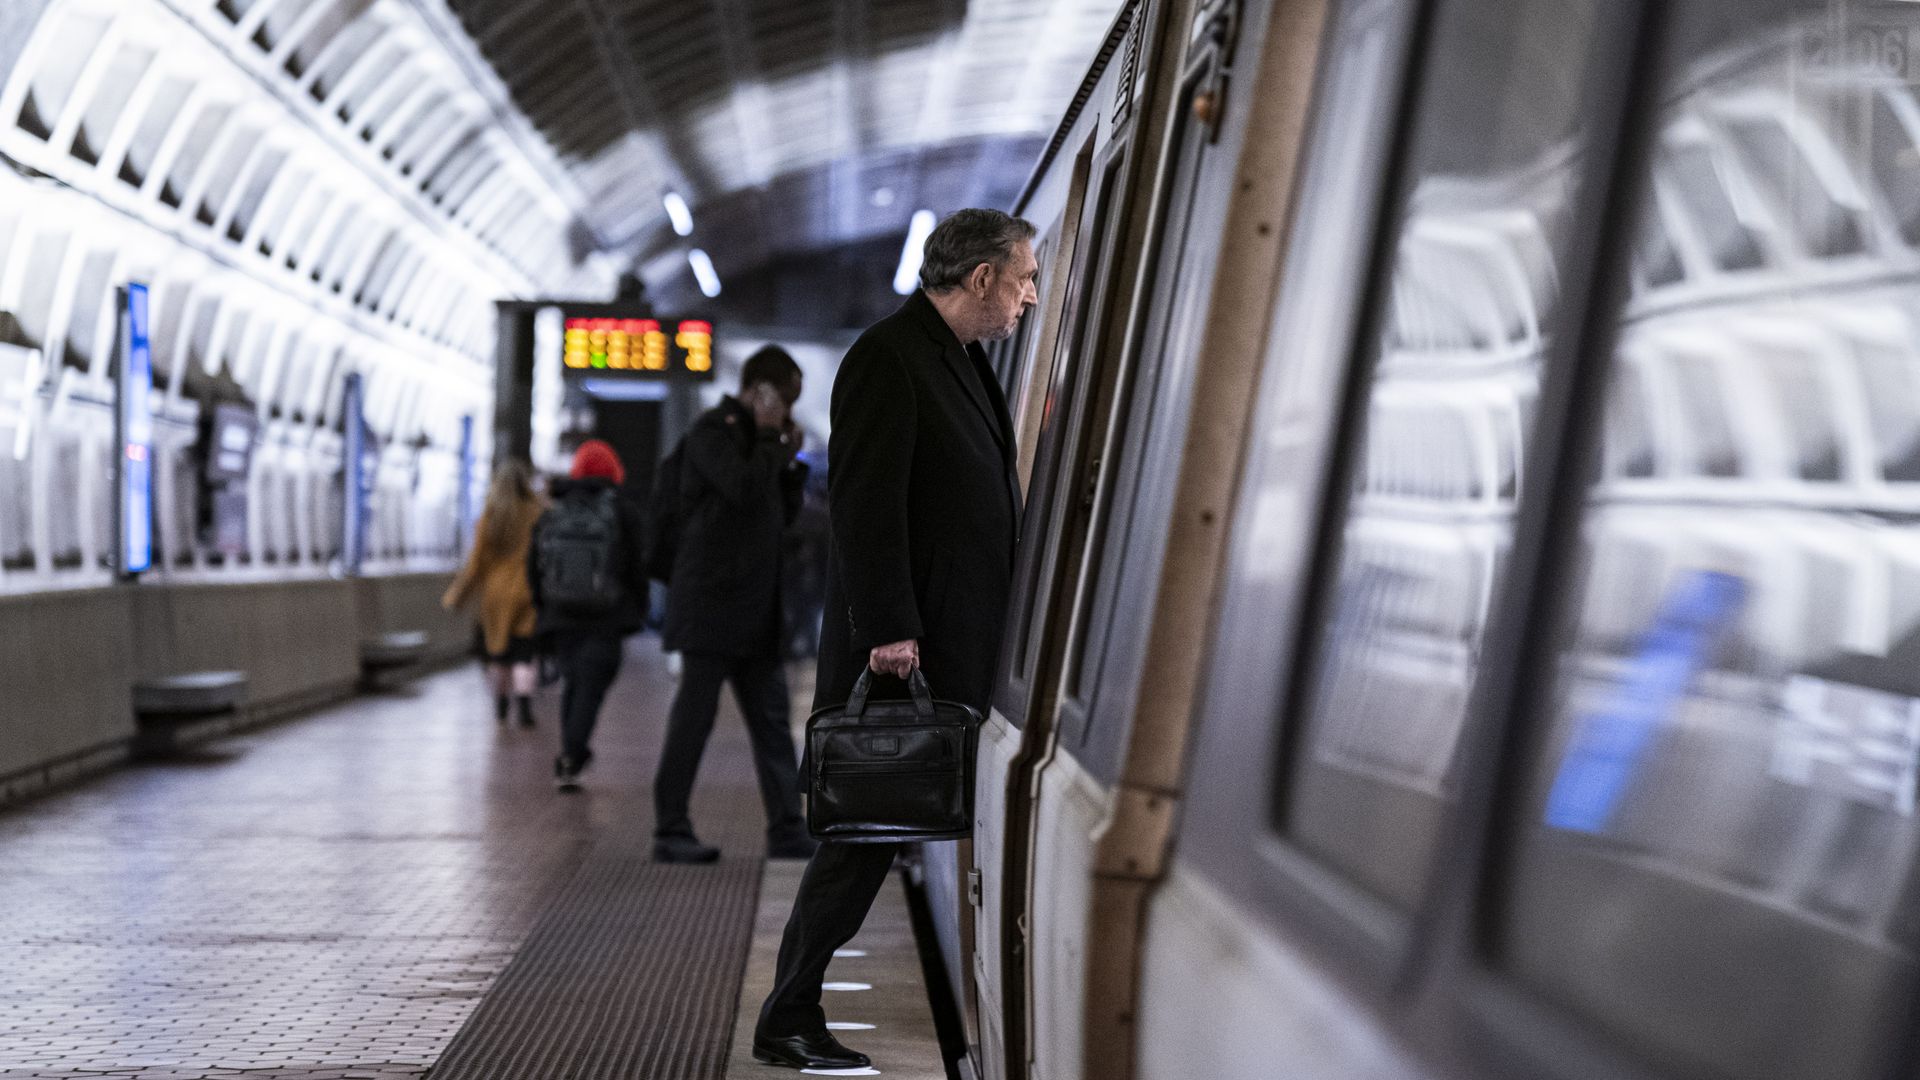 A man steps into a Metro train